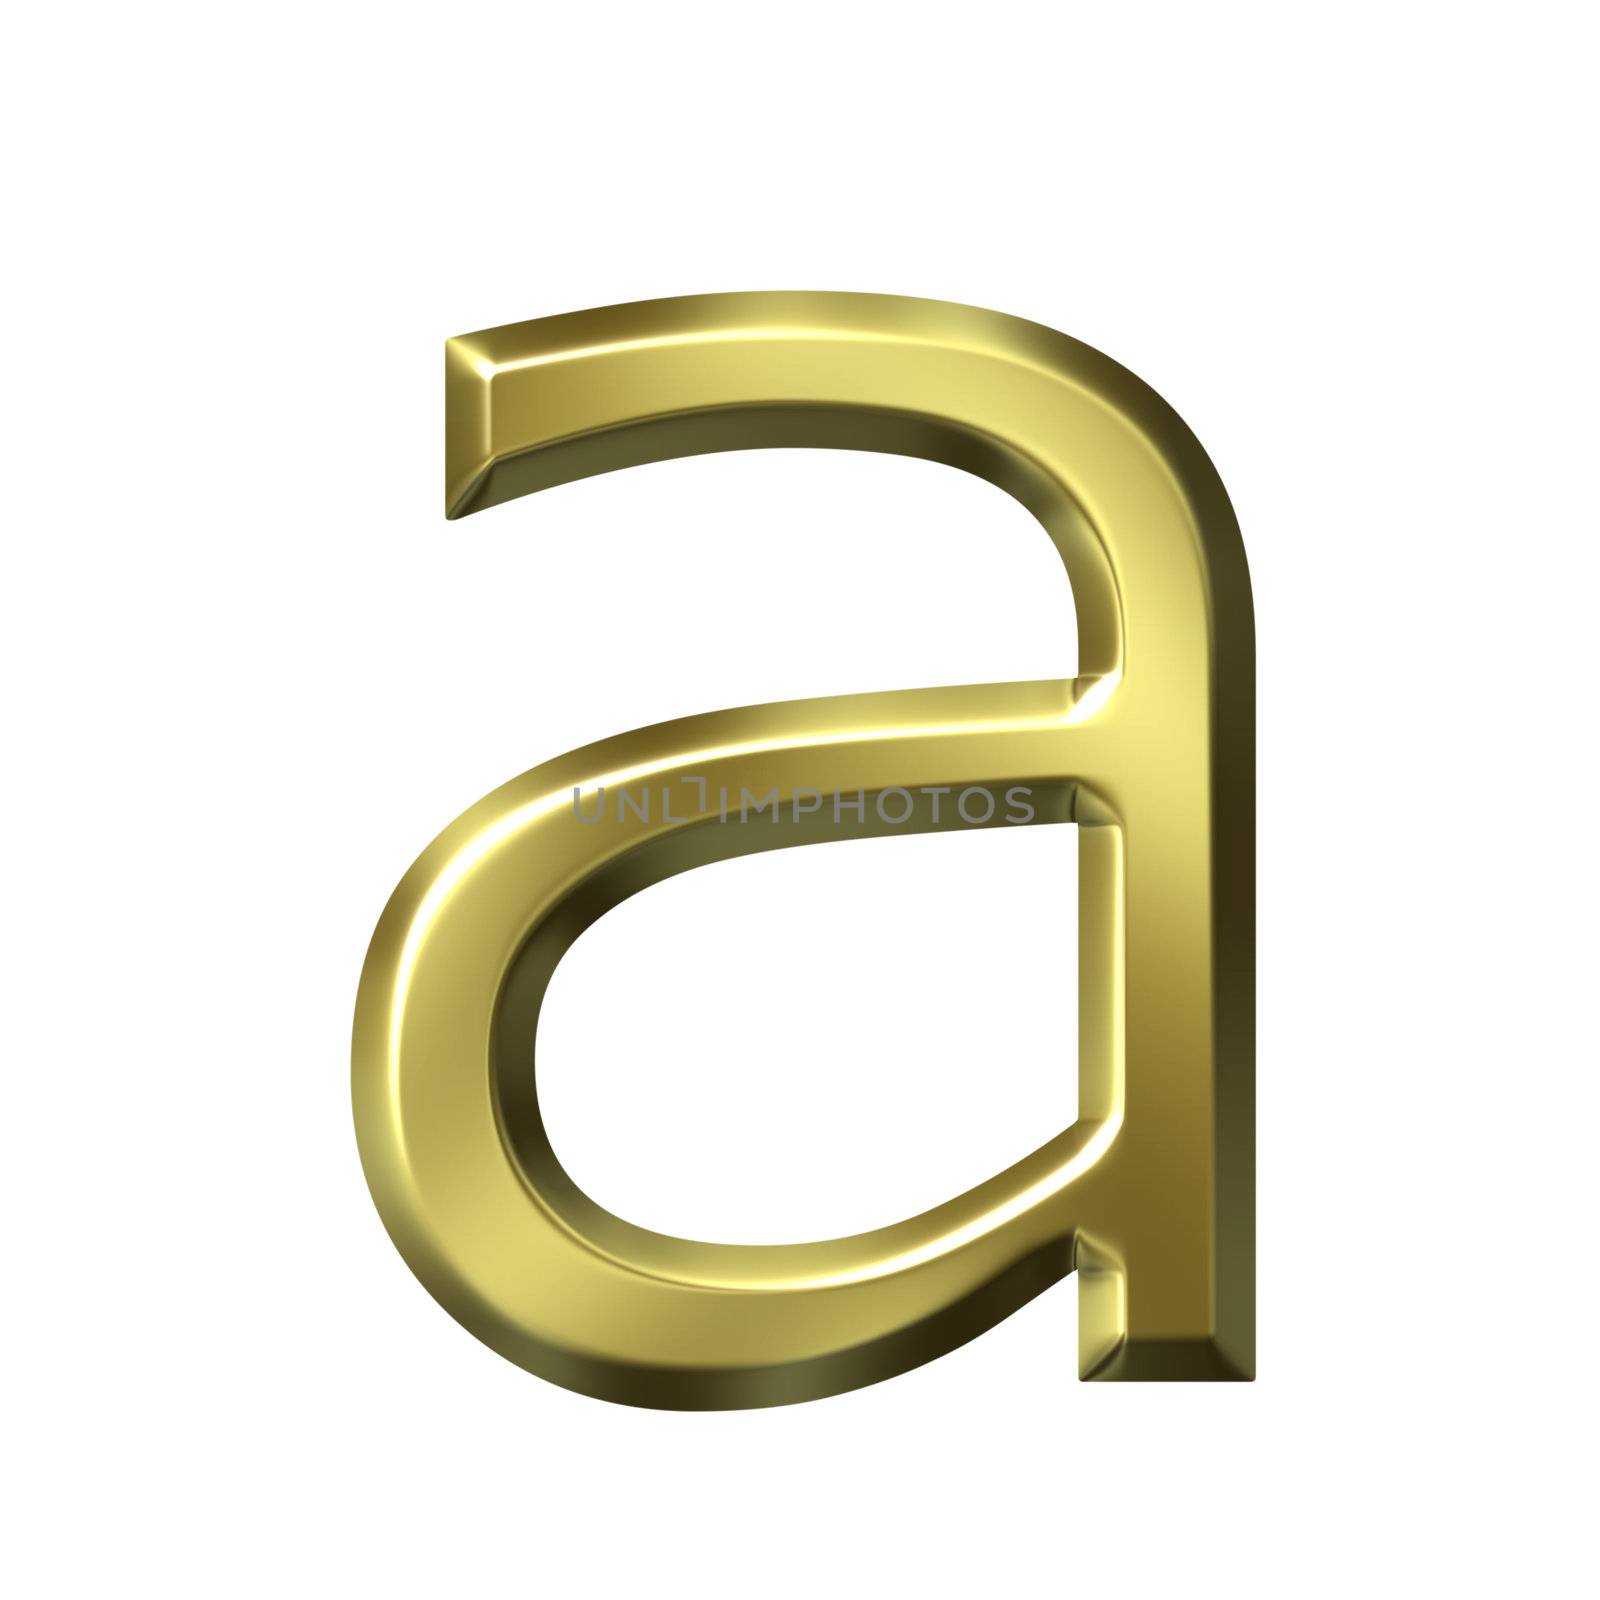 3d golden letter a by Georgios